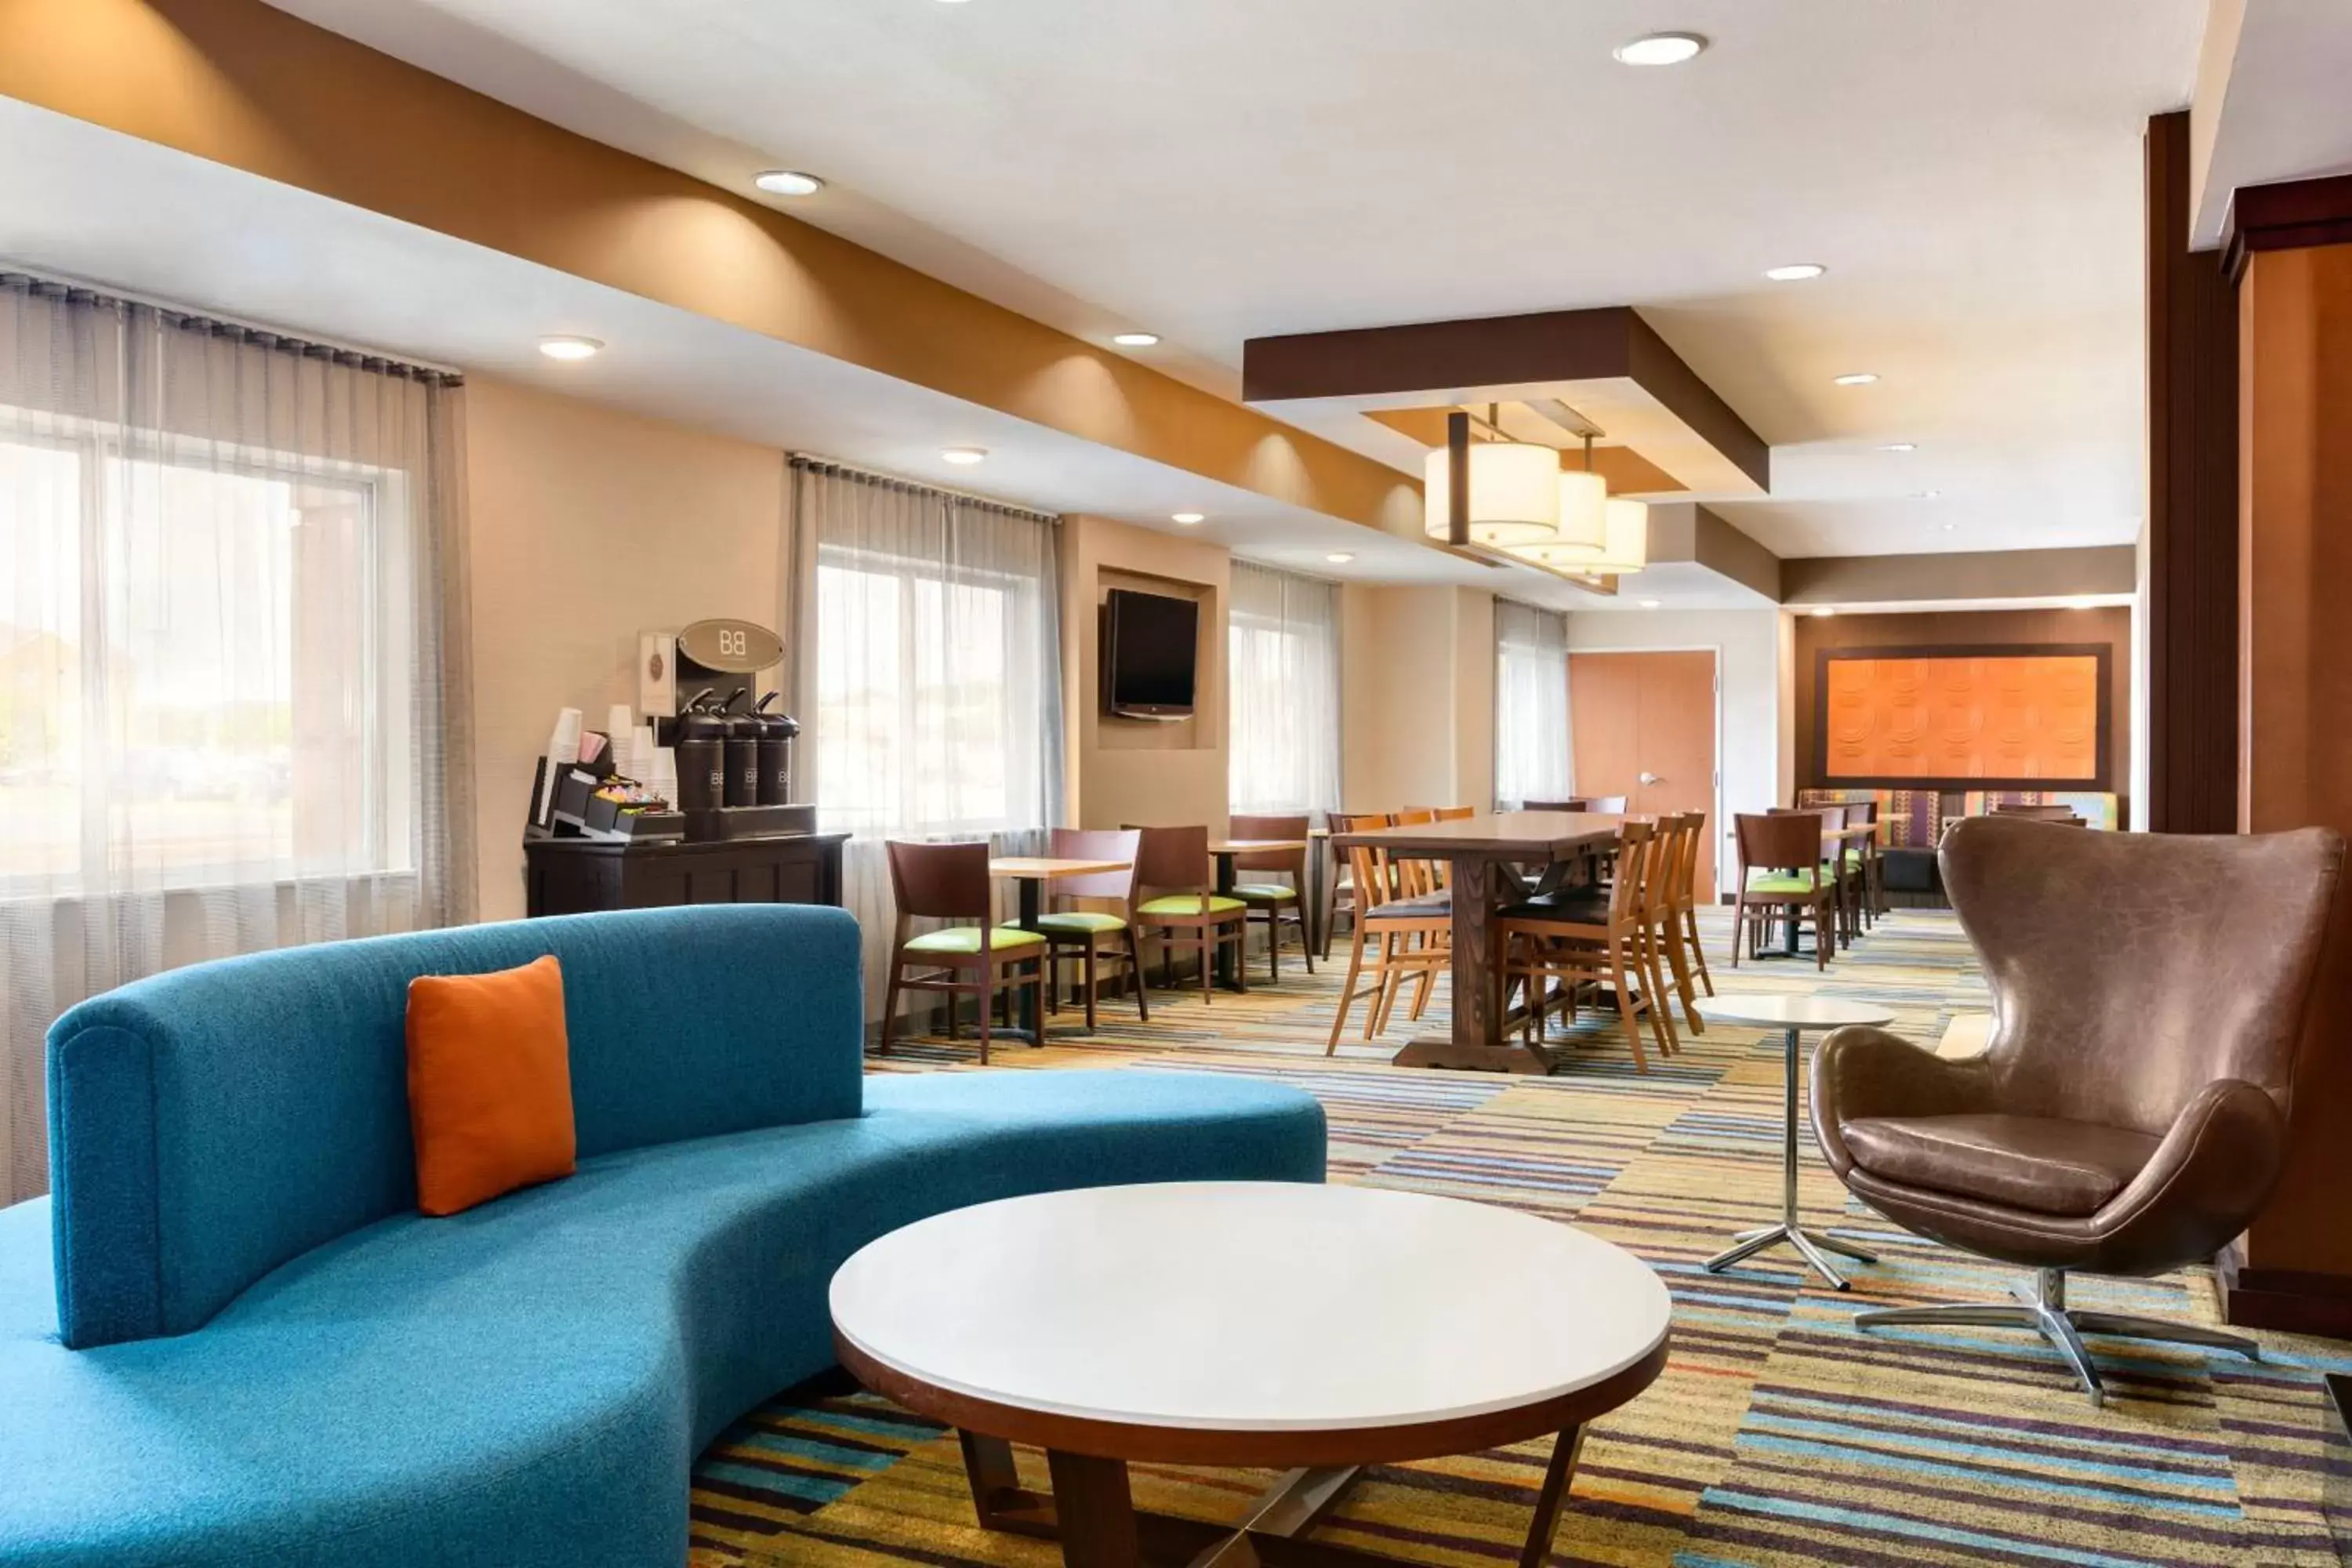 Lobby or reception in Fairfield Inn & Suites by Marriott Toledo Maumee